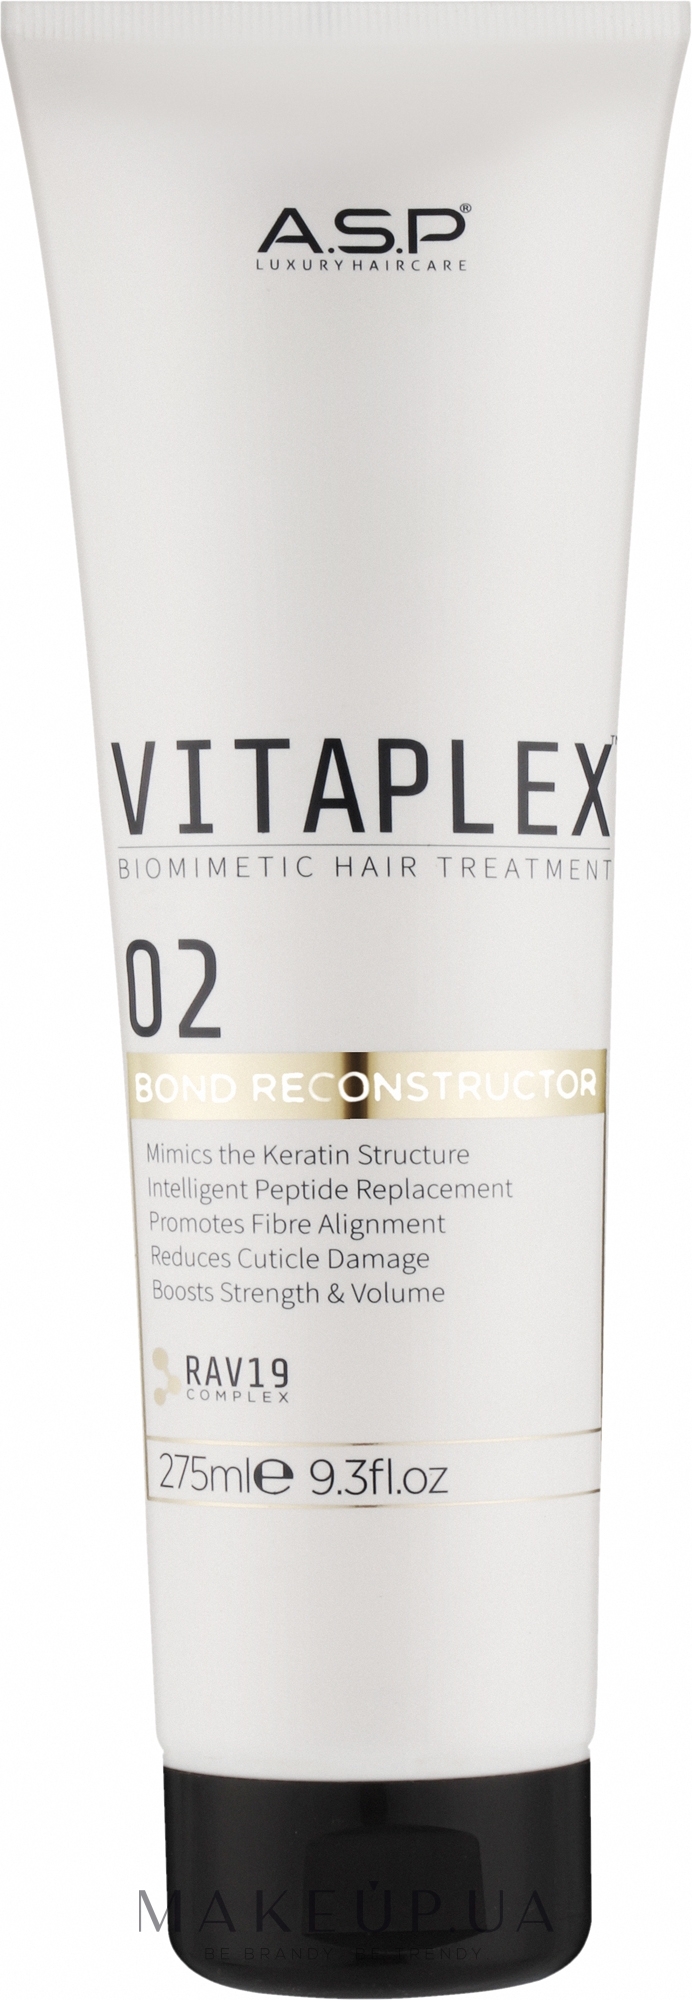 Нанозащита для волос 2 - ASP Vitaplex Biomimetic Hair Treatment Part 2 Reconstructor — фото 275ml